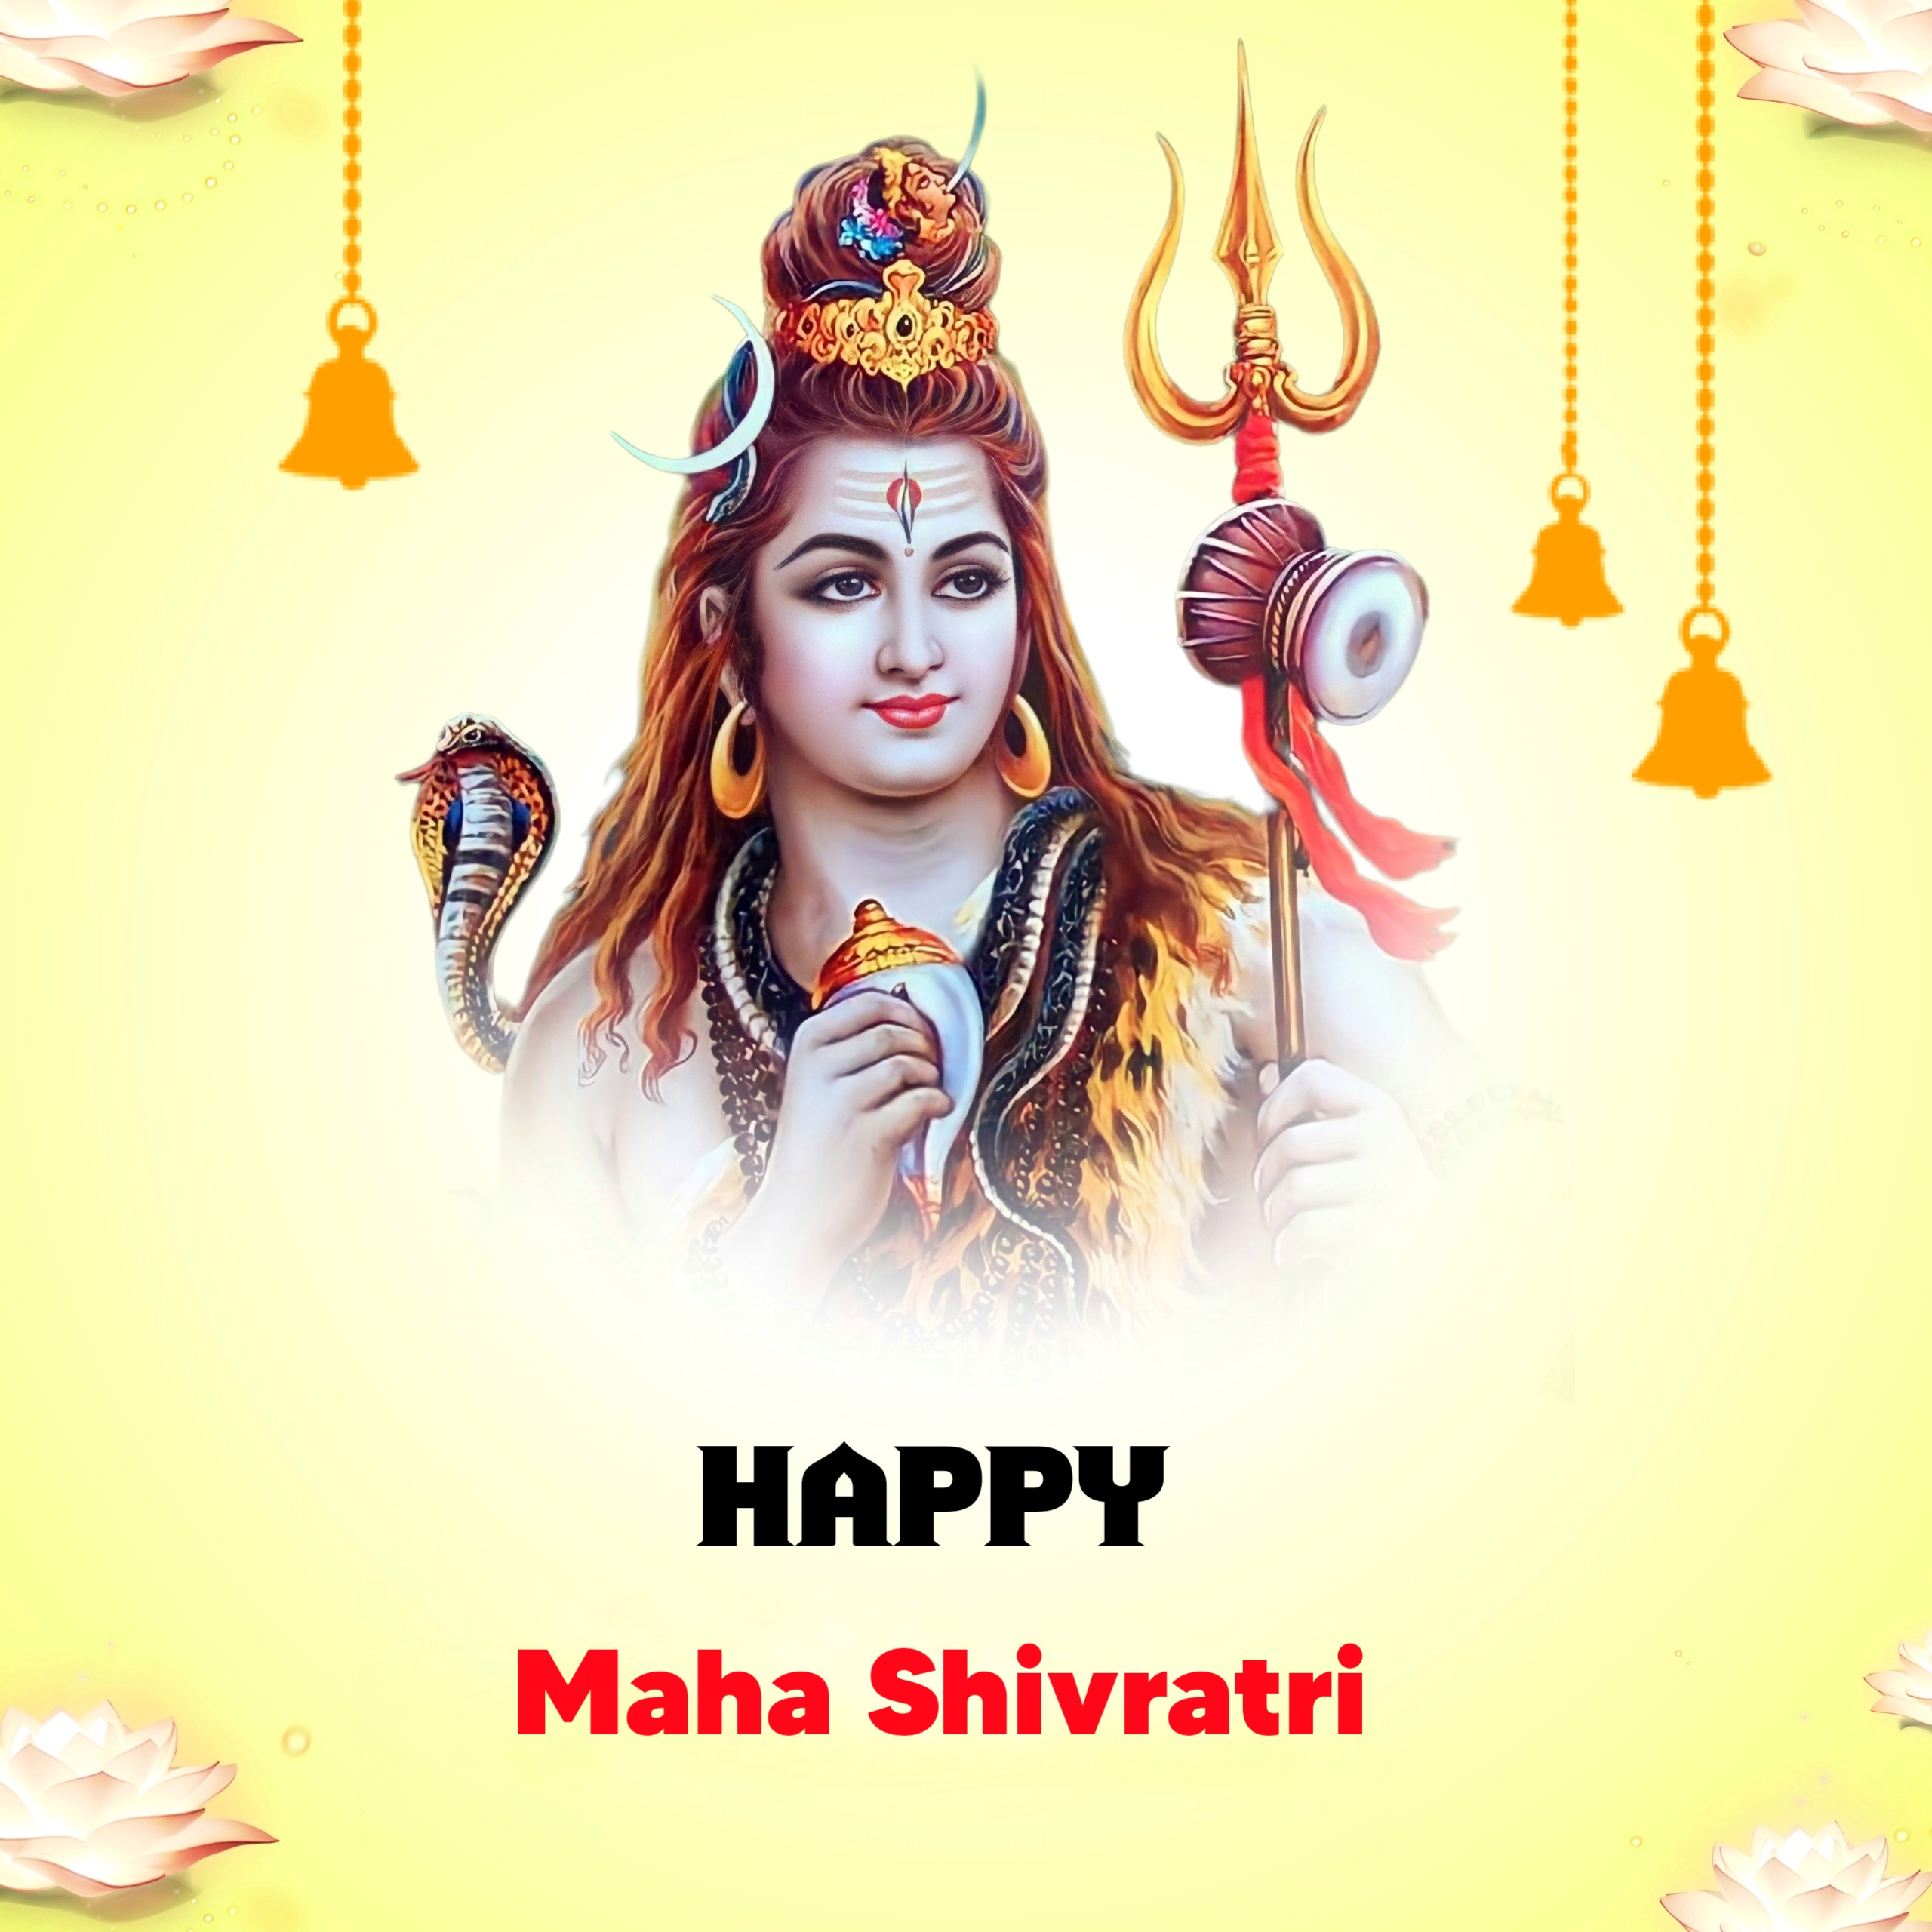 Maha Shivratri Image With Har Har Mahadev 